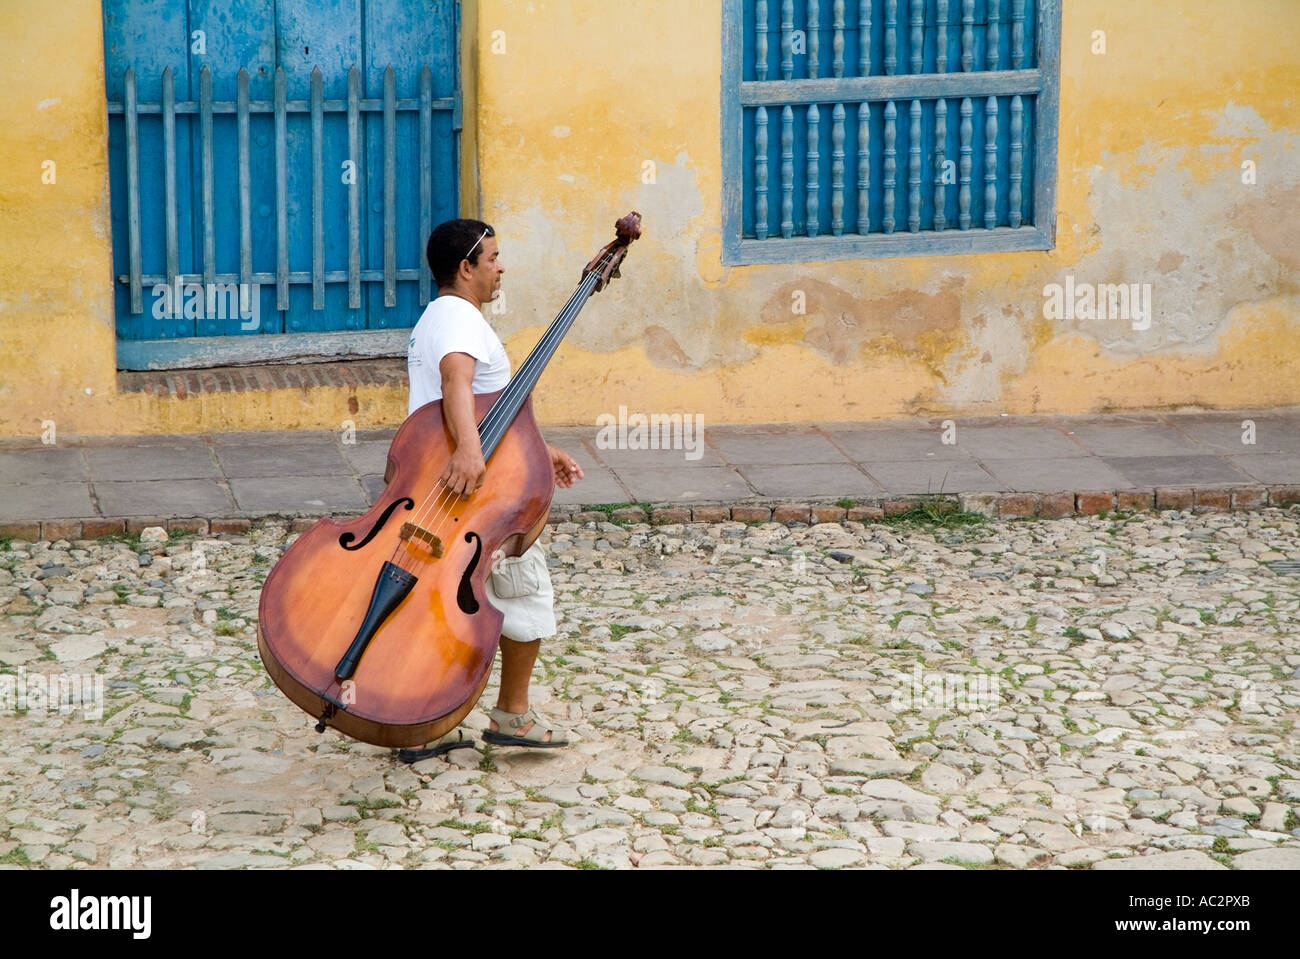 Cuba - Uomo musicista camminando giù Simon Bolivar portando un contrabbasso in Trinidad, Cuba Foto Stock